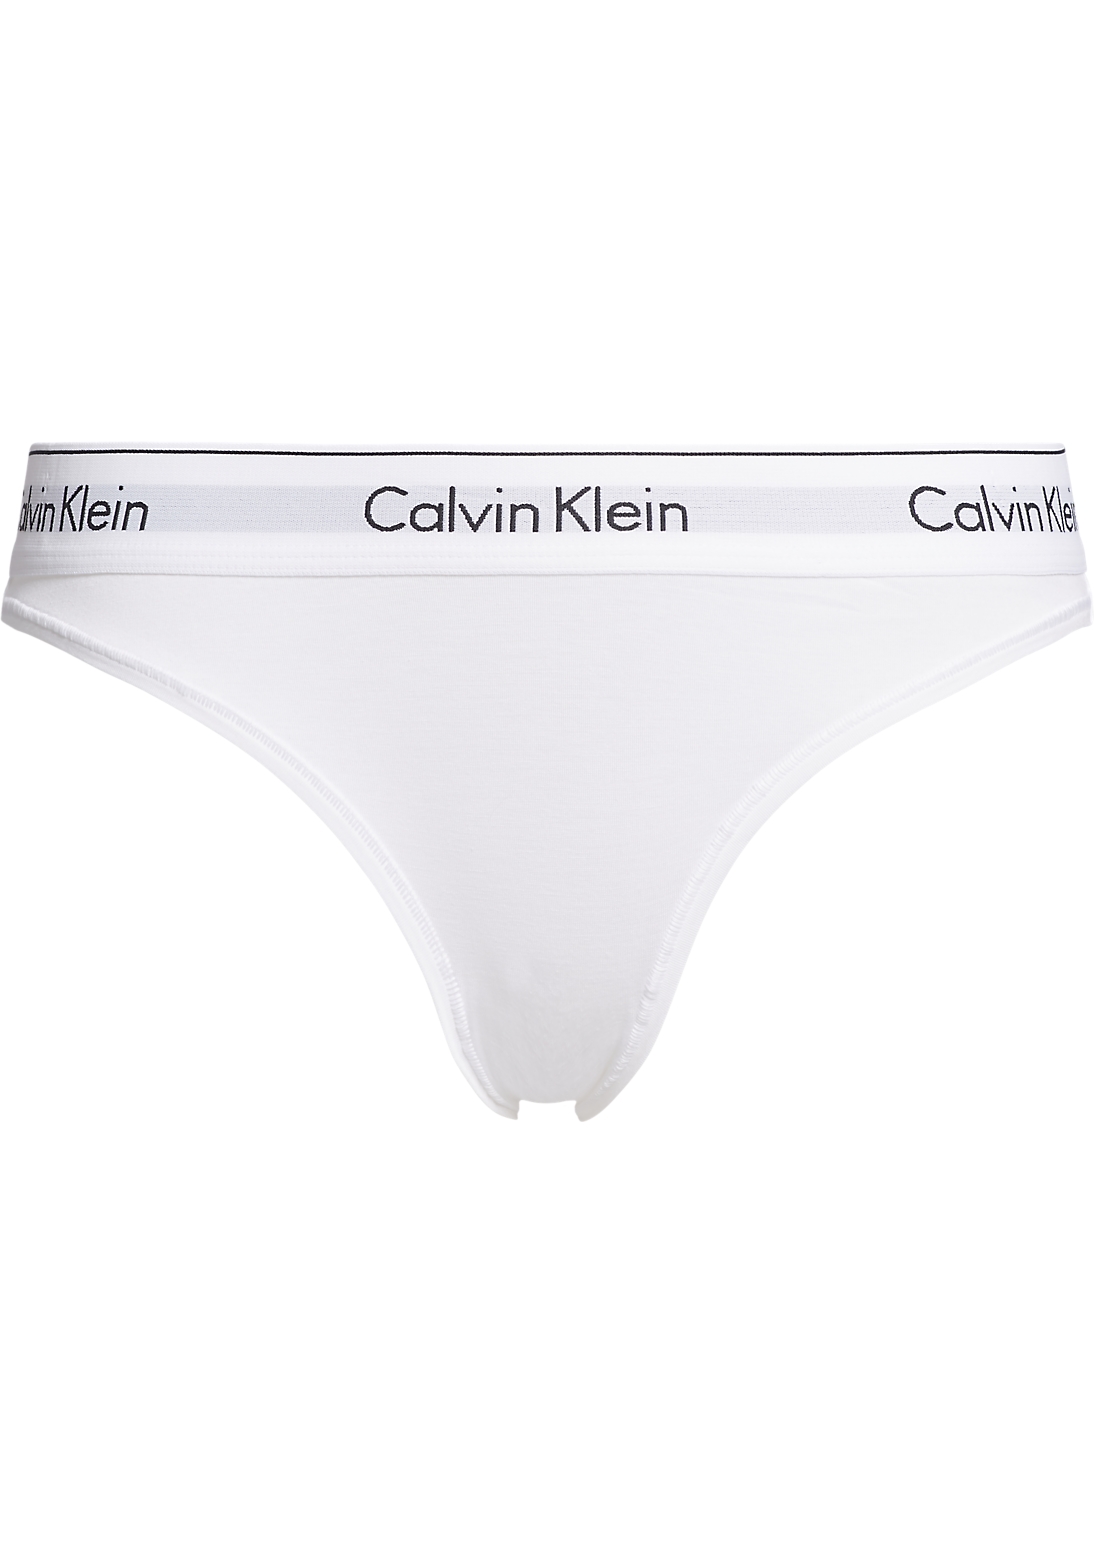 Zonsverduistering cement Registratie Calvin Klein dames Modern Cotton slip, wit - Zomer SALE tot 50% korting